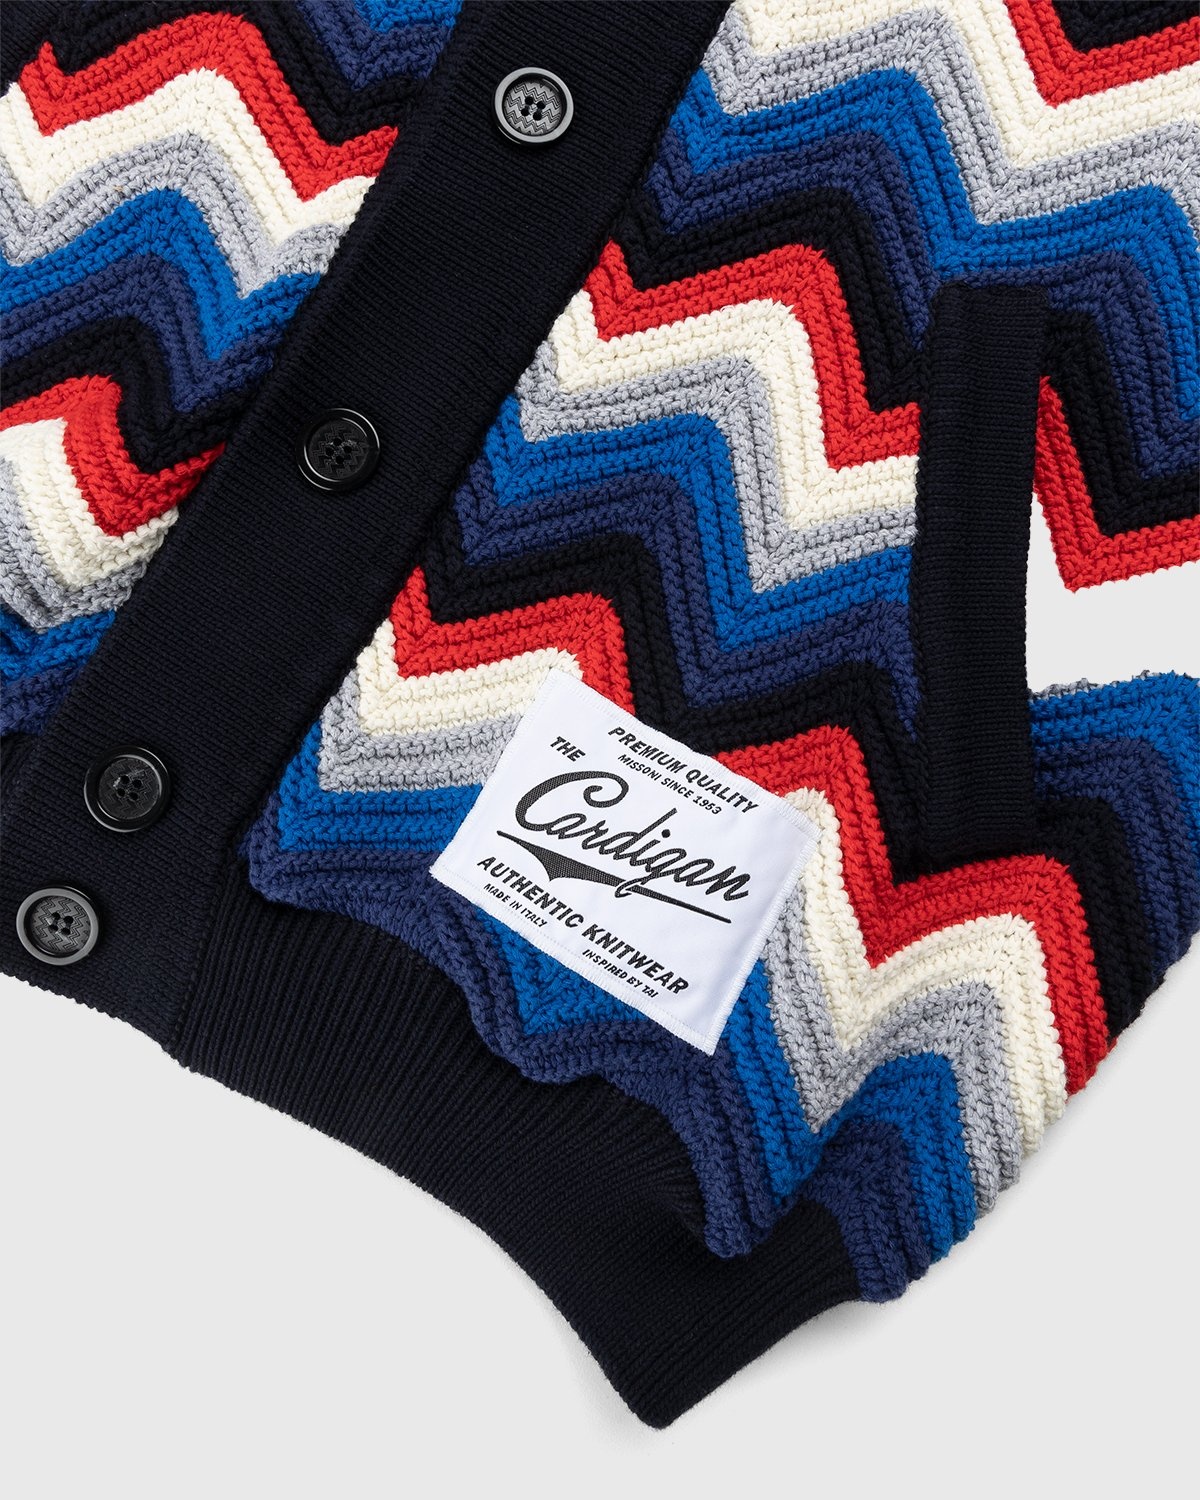 Missoni – Wavy Cotton Cardigan Multi - Cardigans - Multi - Image 4